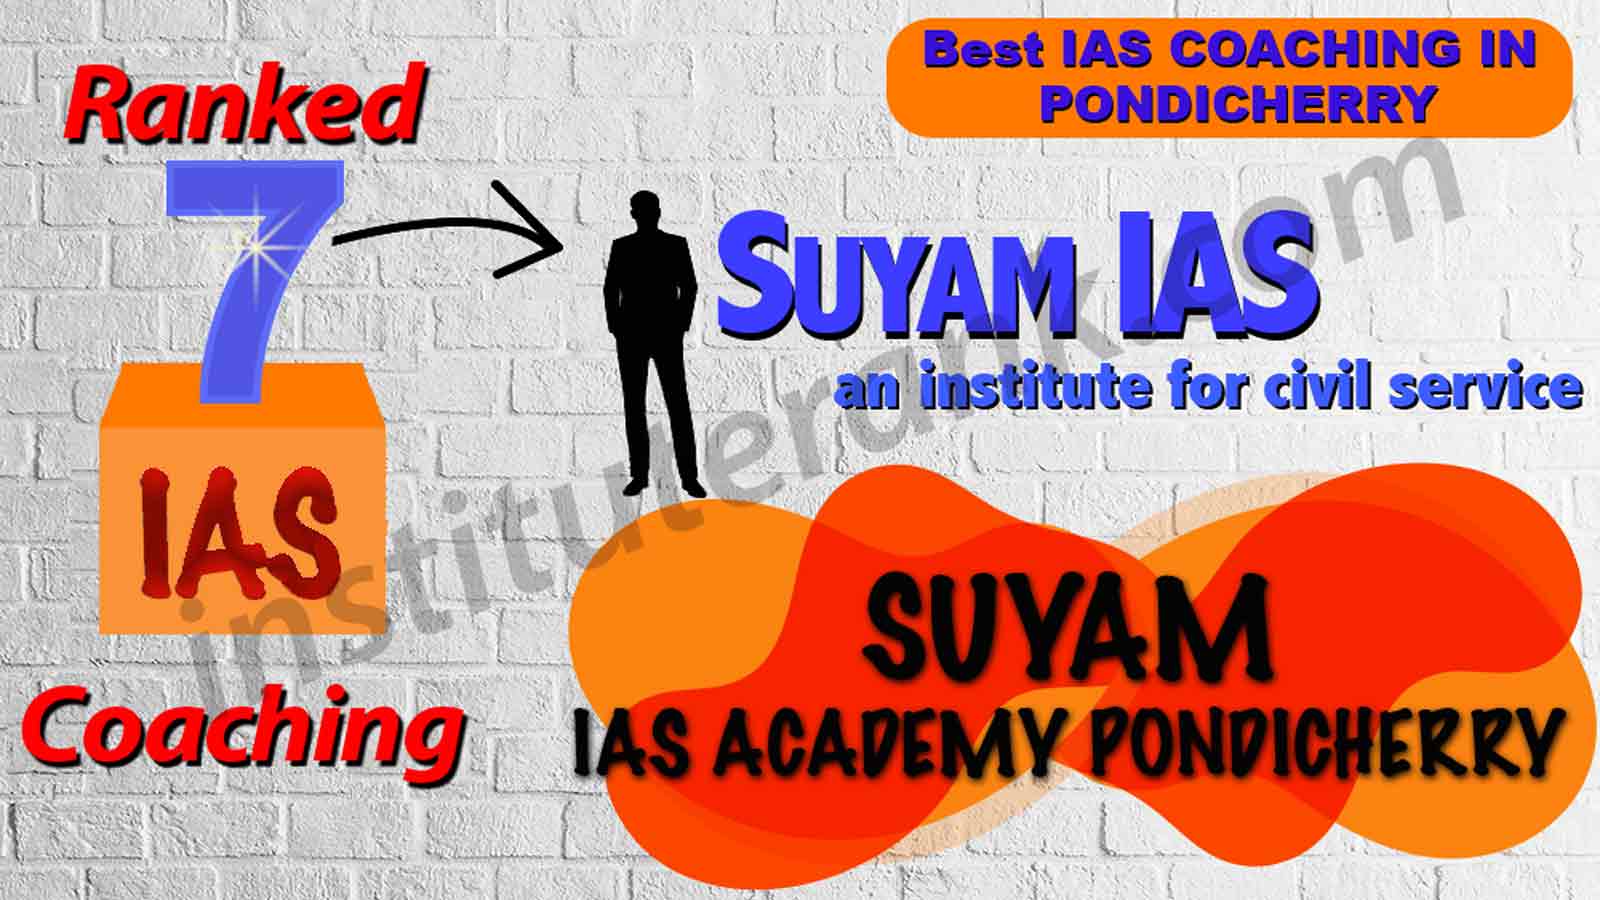 Best IAS Coaching in Pondicherry